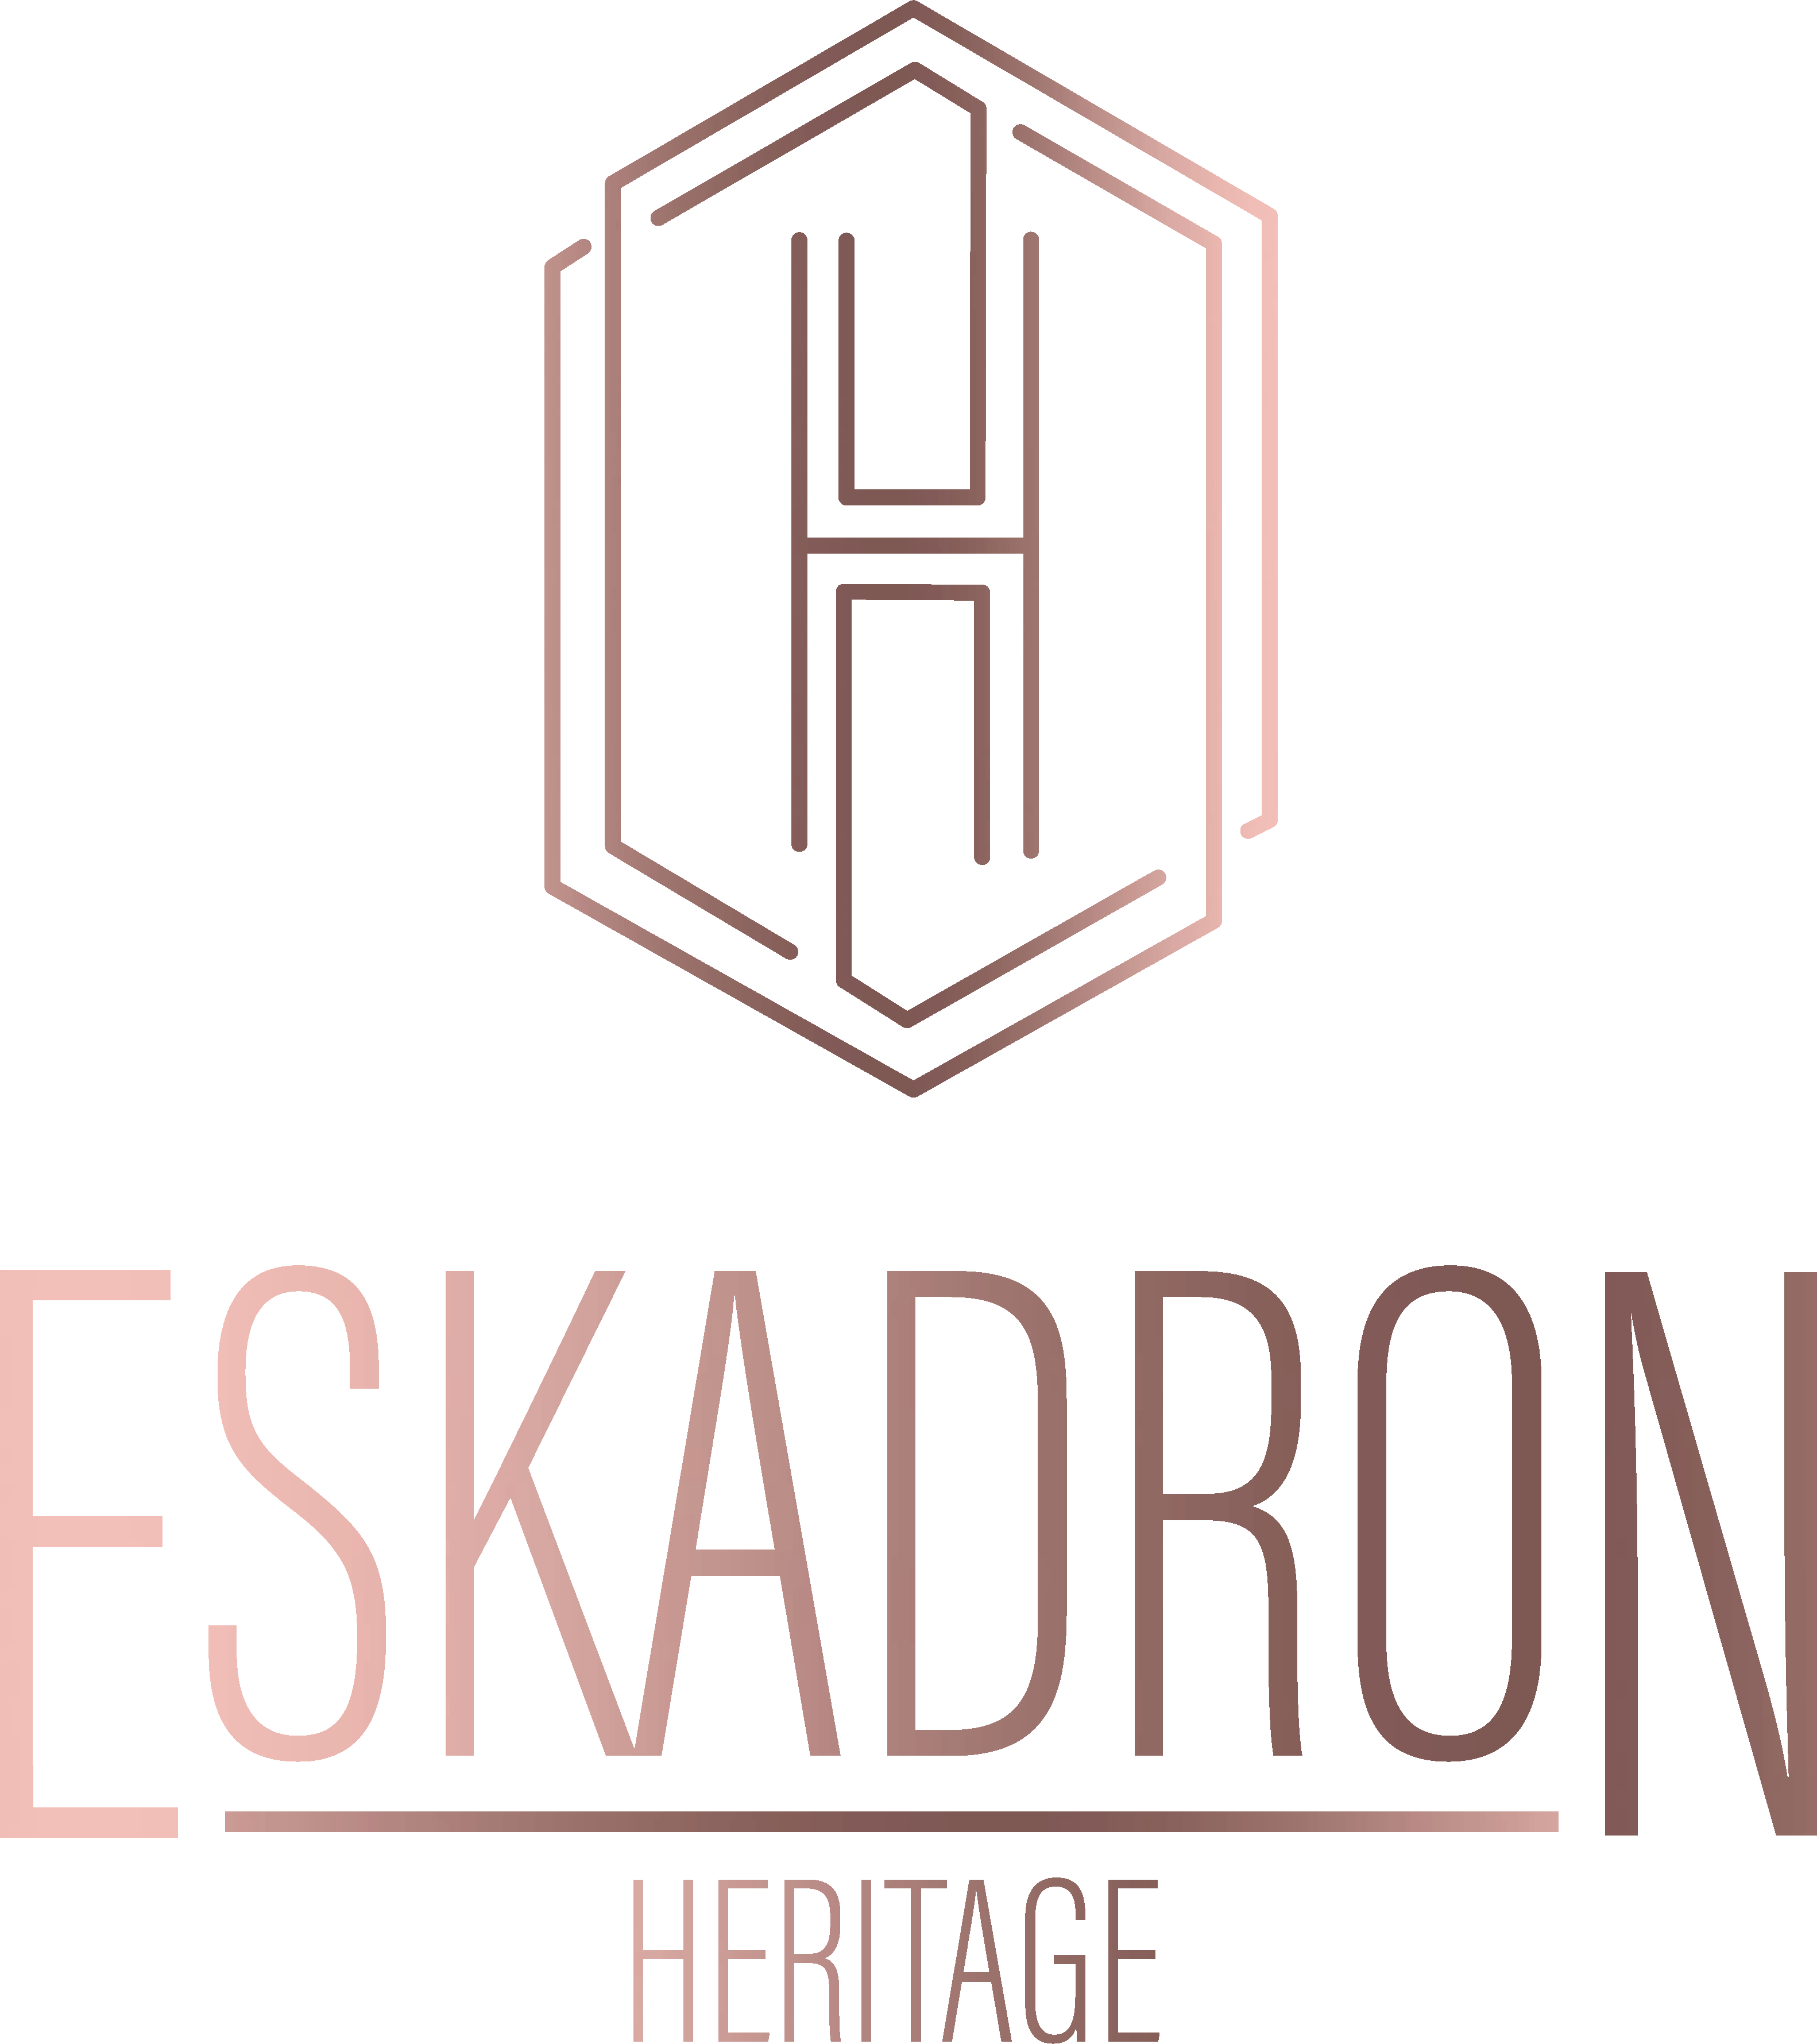 Eskadron Heritage Logo